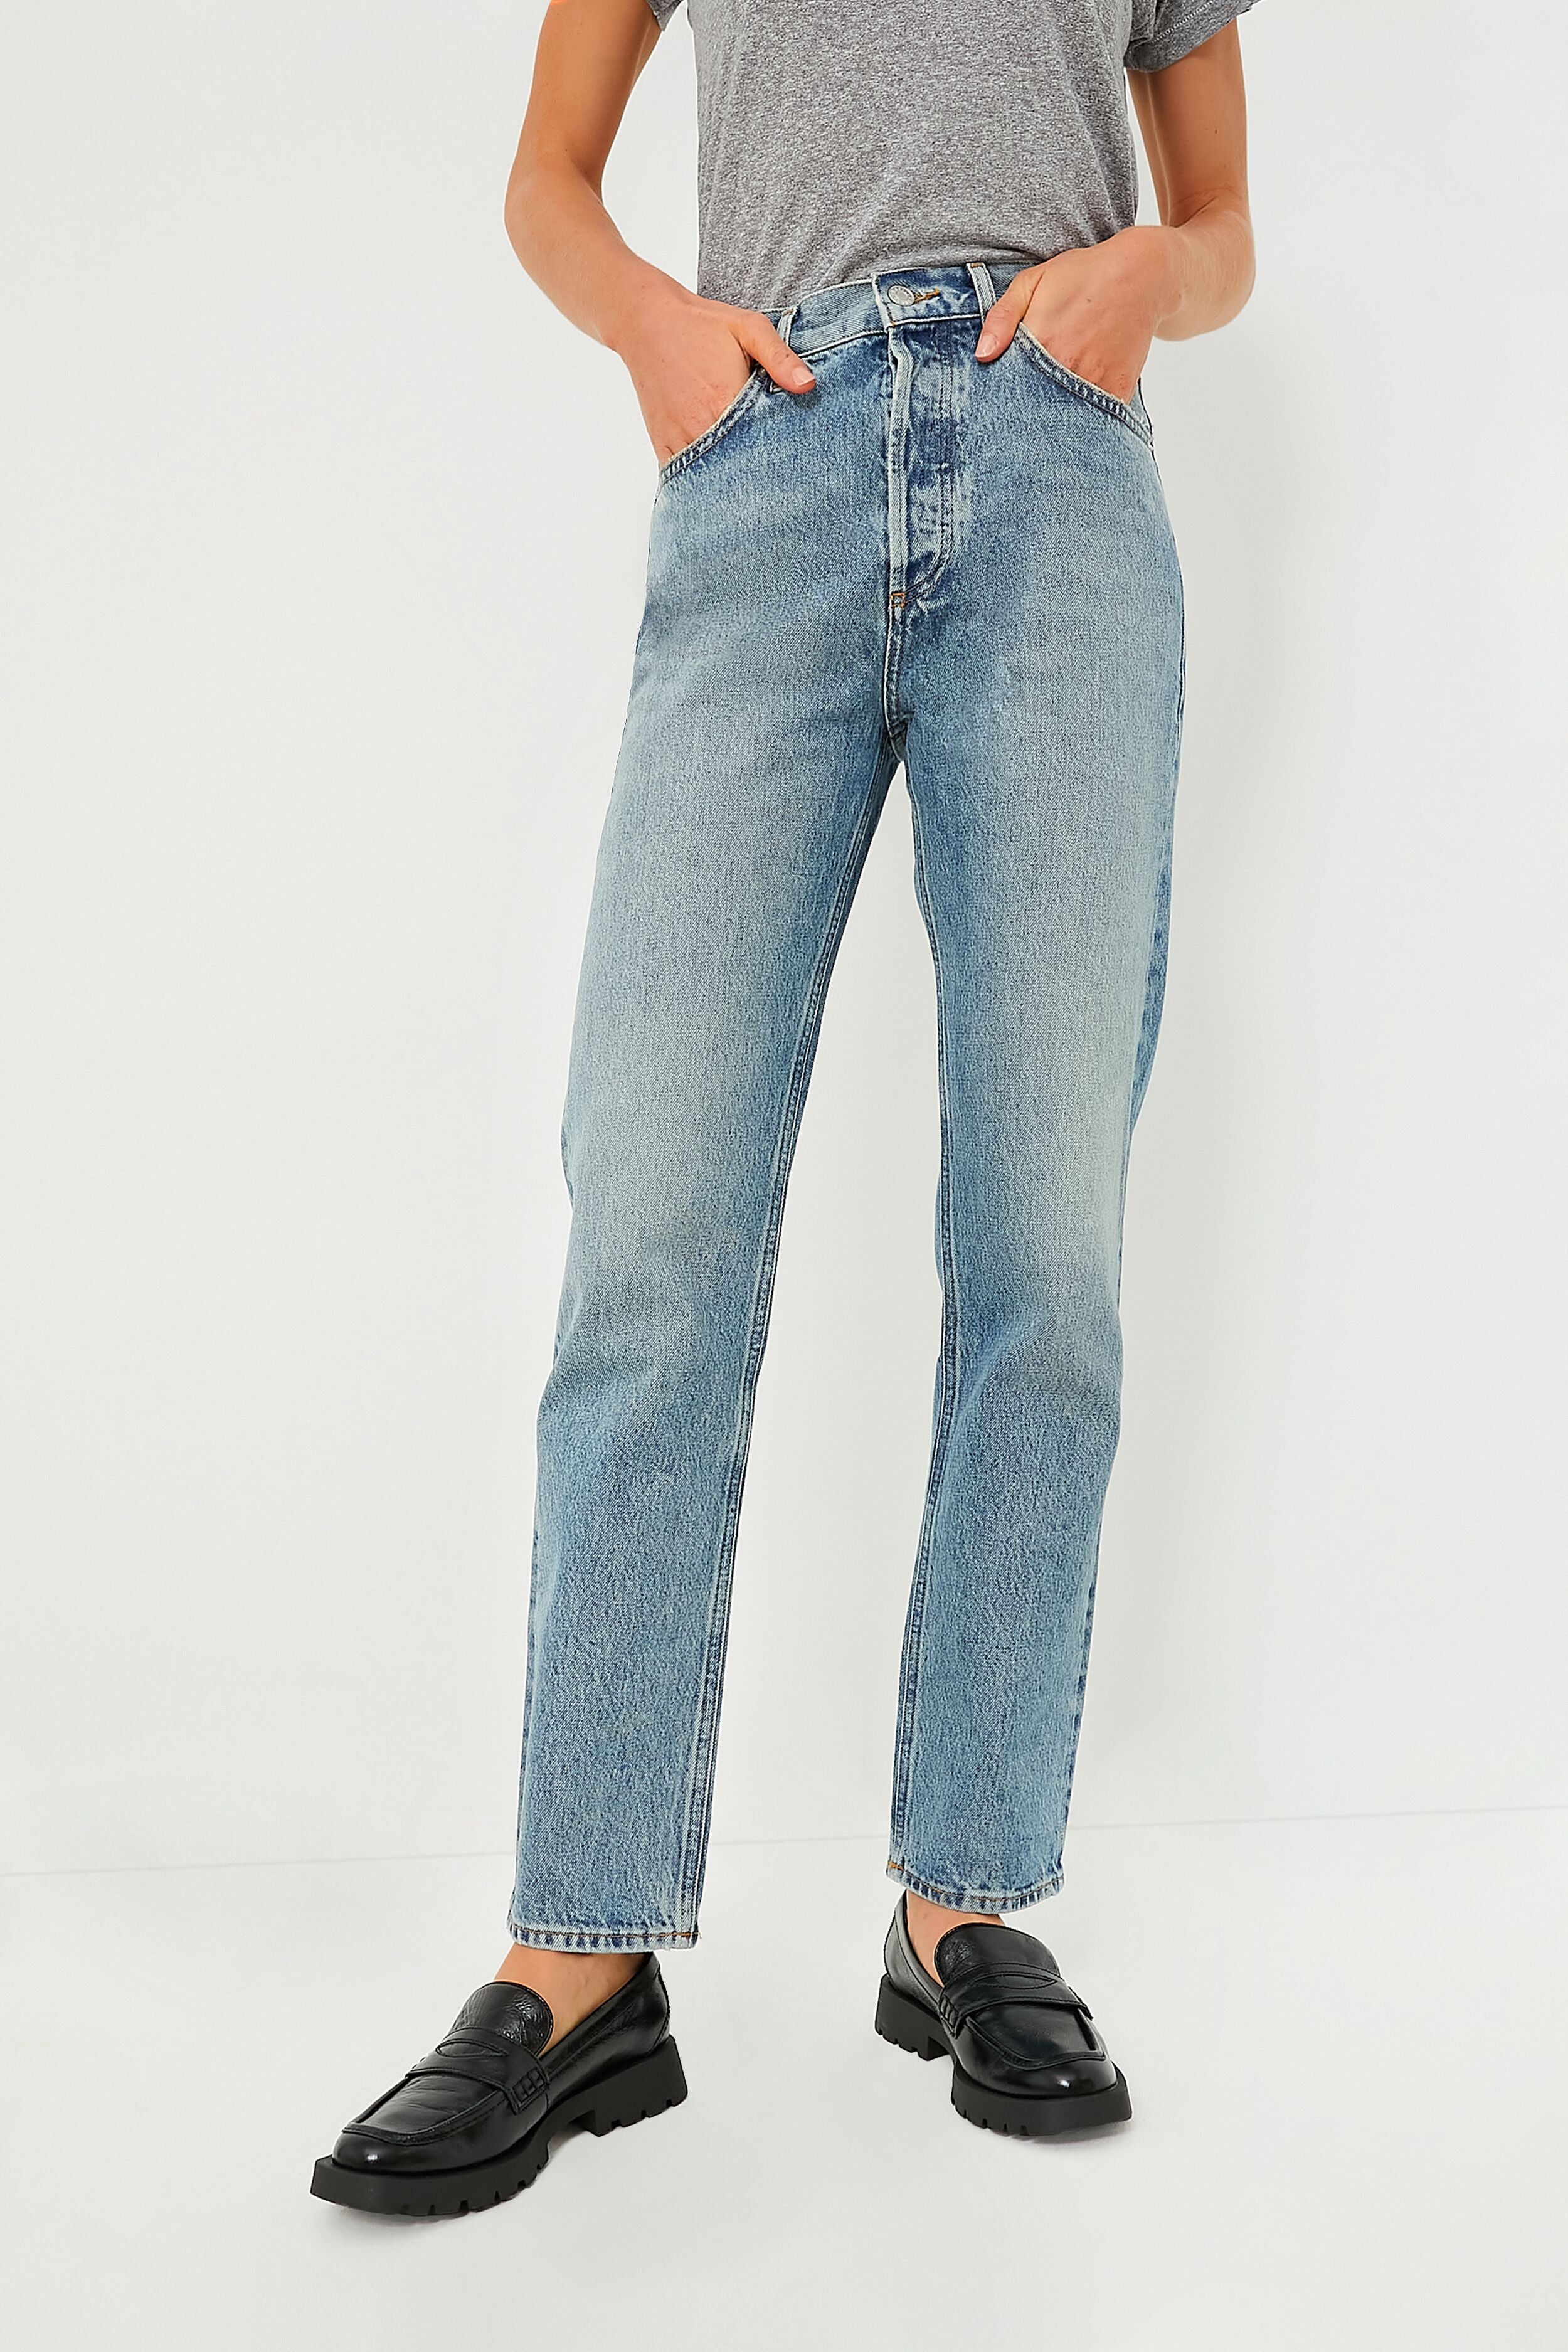 90s Ultra High Waist Jeans Vintage Riding Pants Size 10 Large